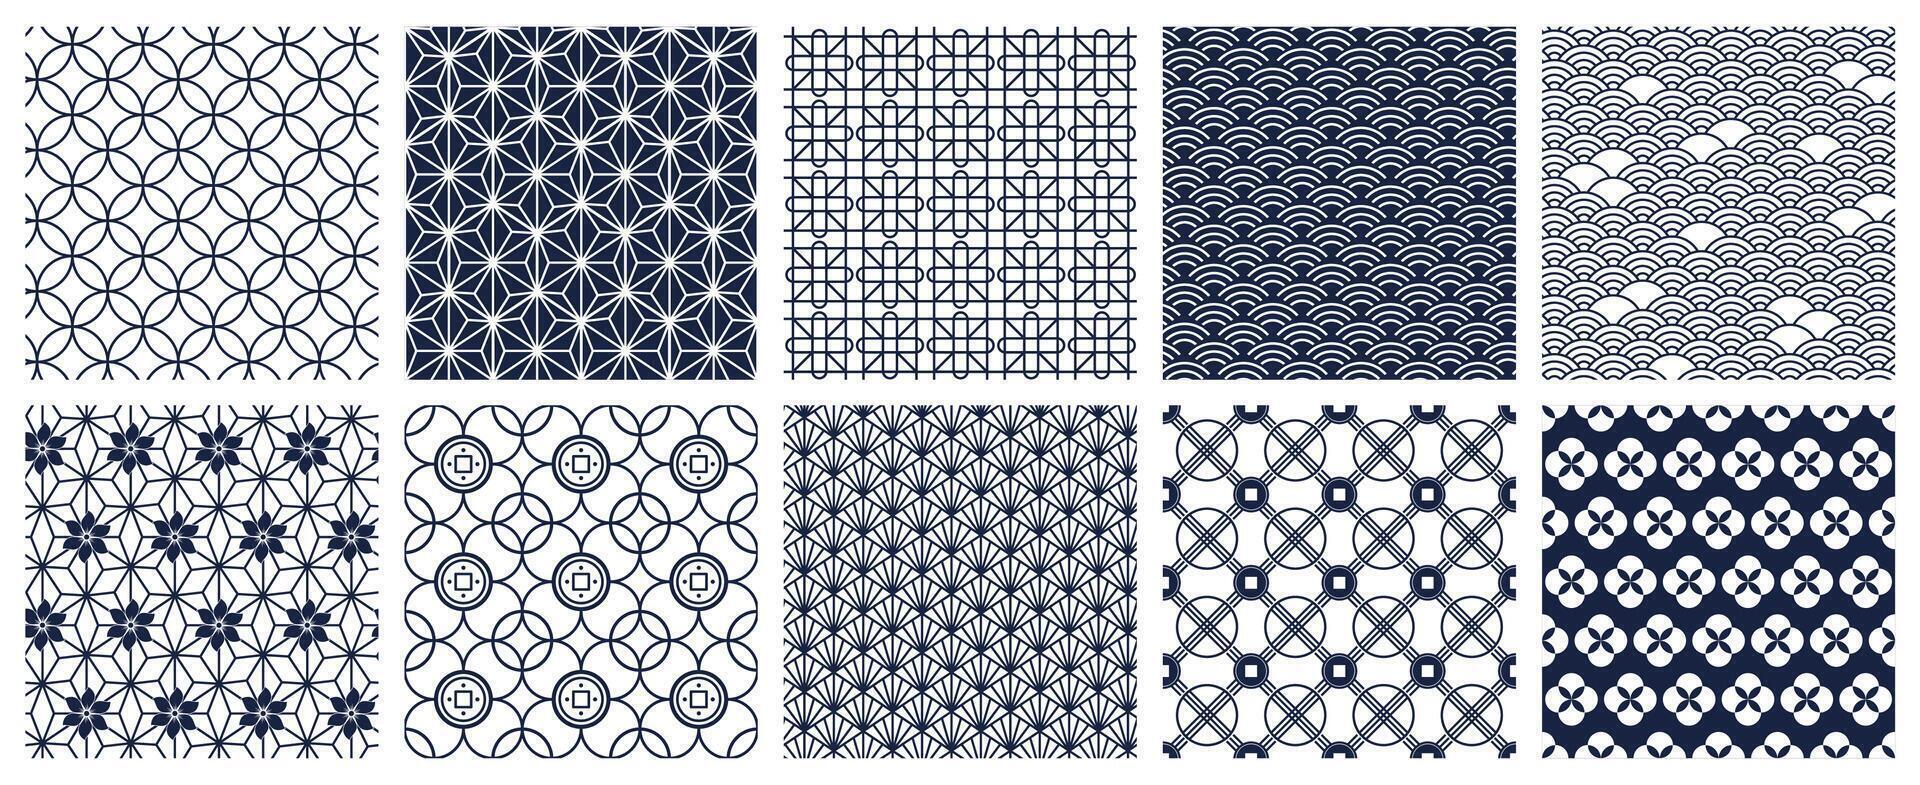 Japanese geometric patterns. Seamless oriental decorative backdrops, geometric ornamental pattern. Traditional asian motifs vector background set